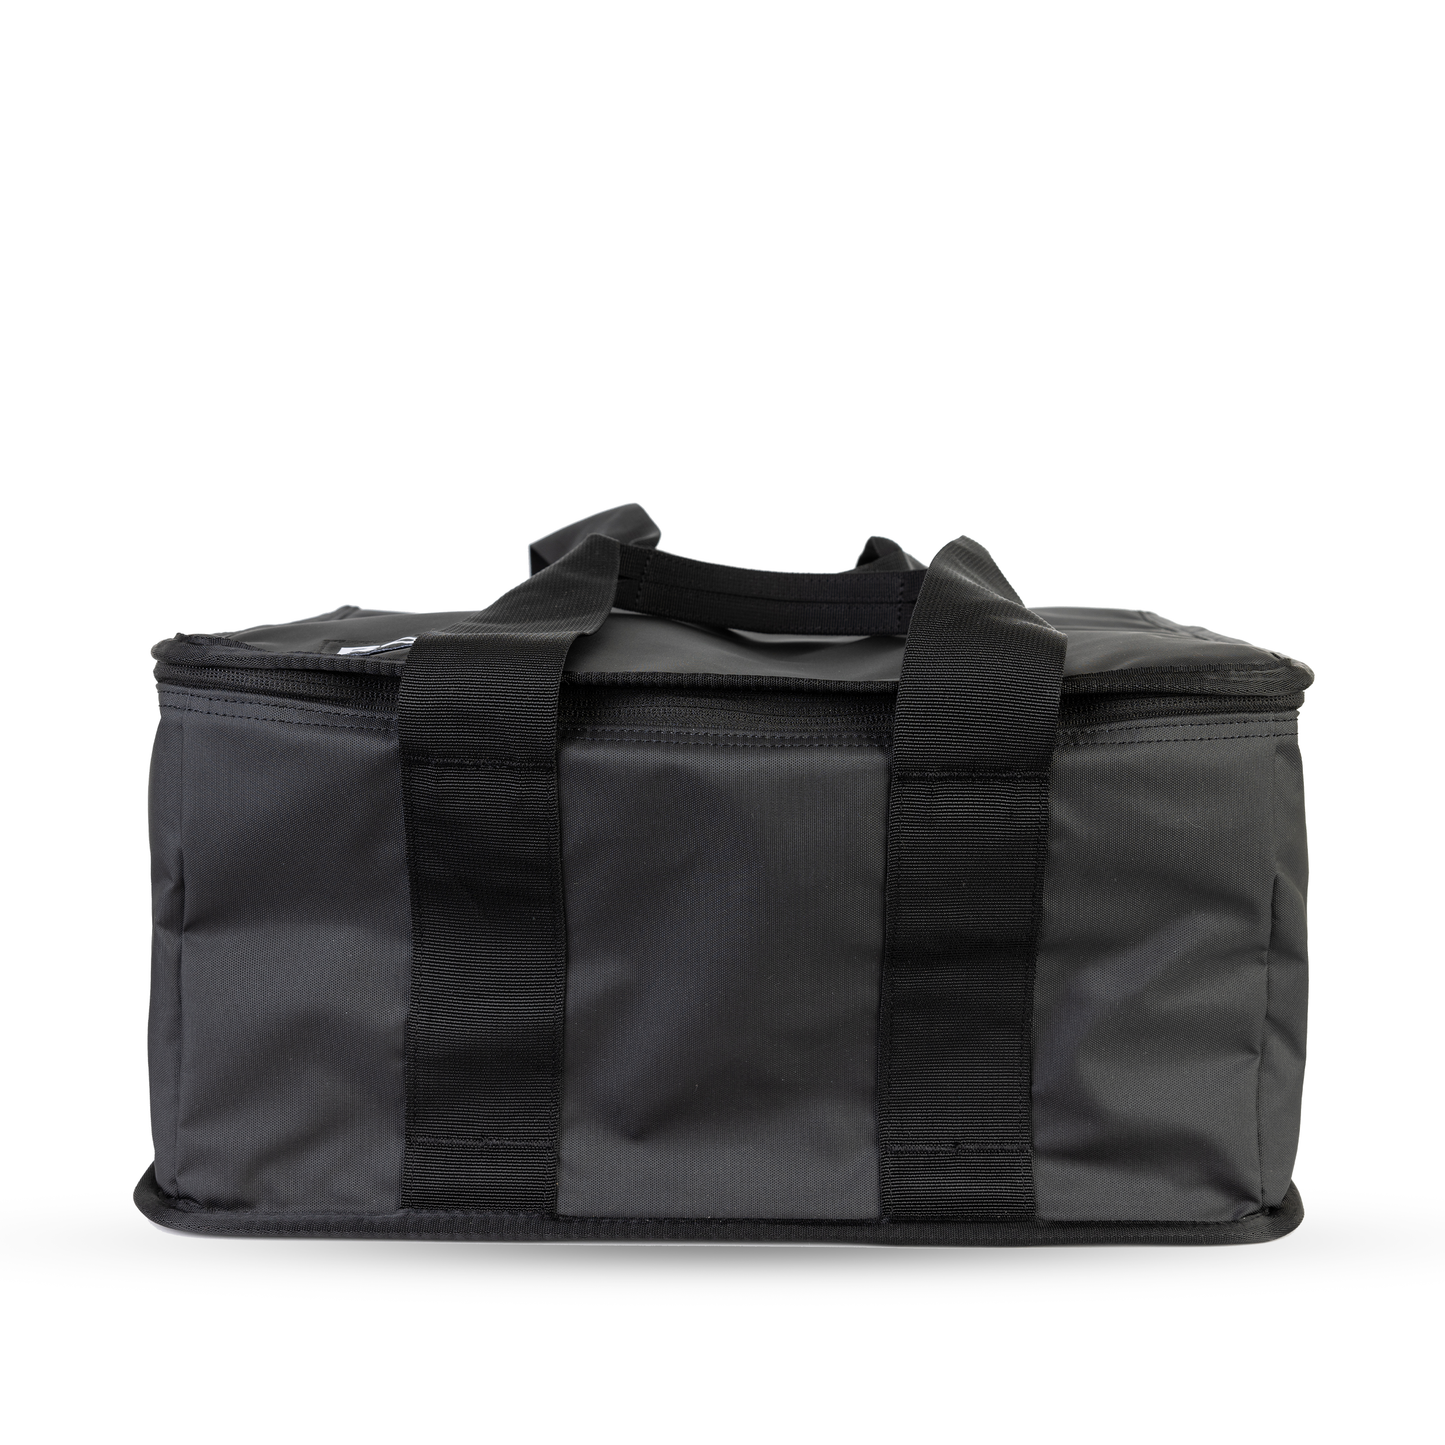 Rugged Bag 2.2 by ROAM Adventure Co.